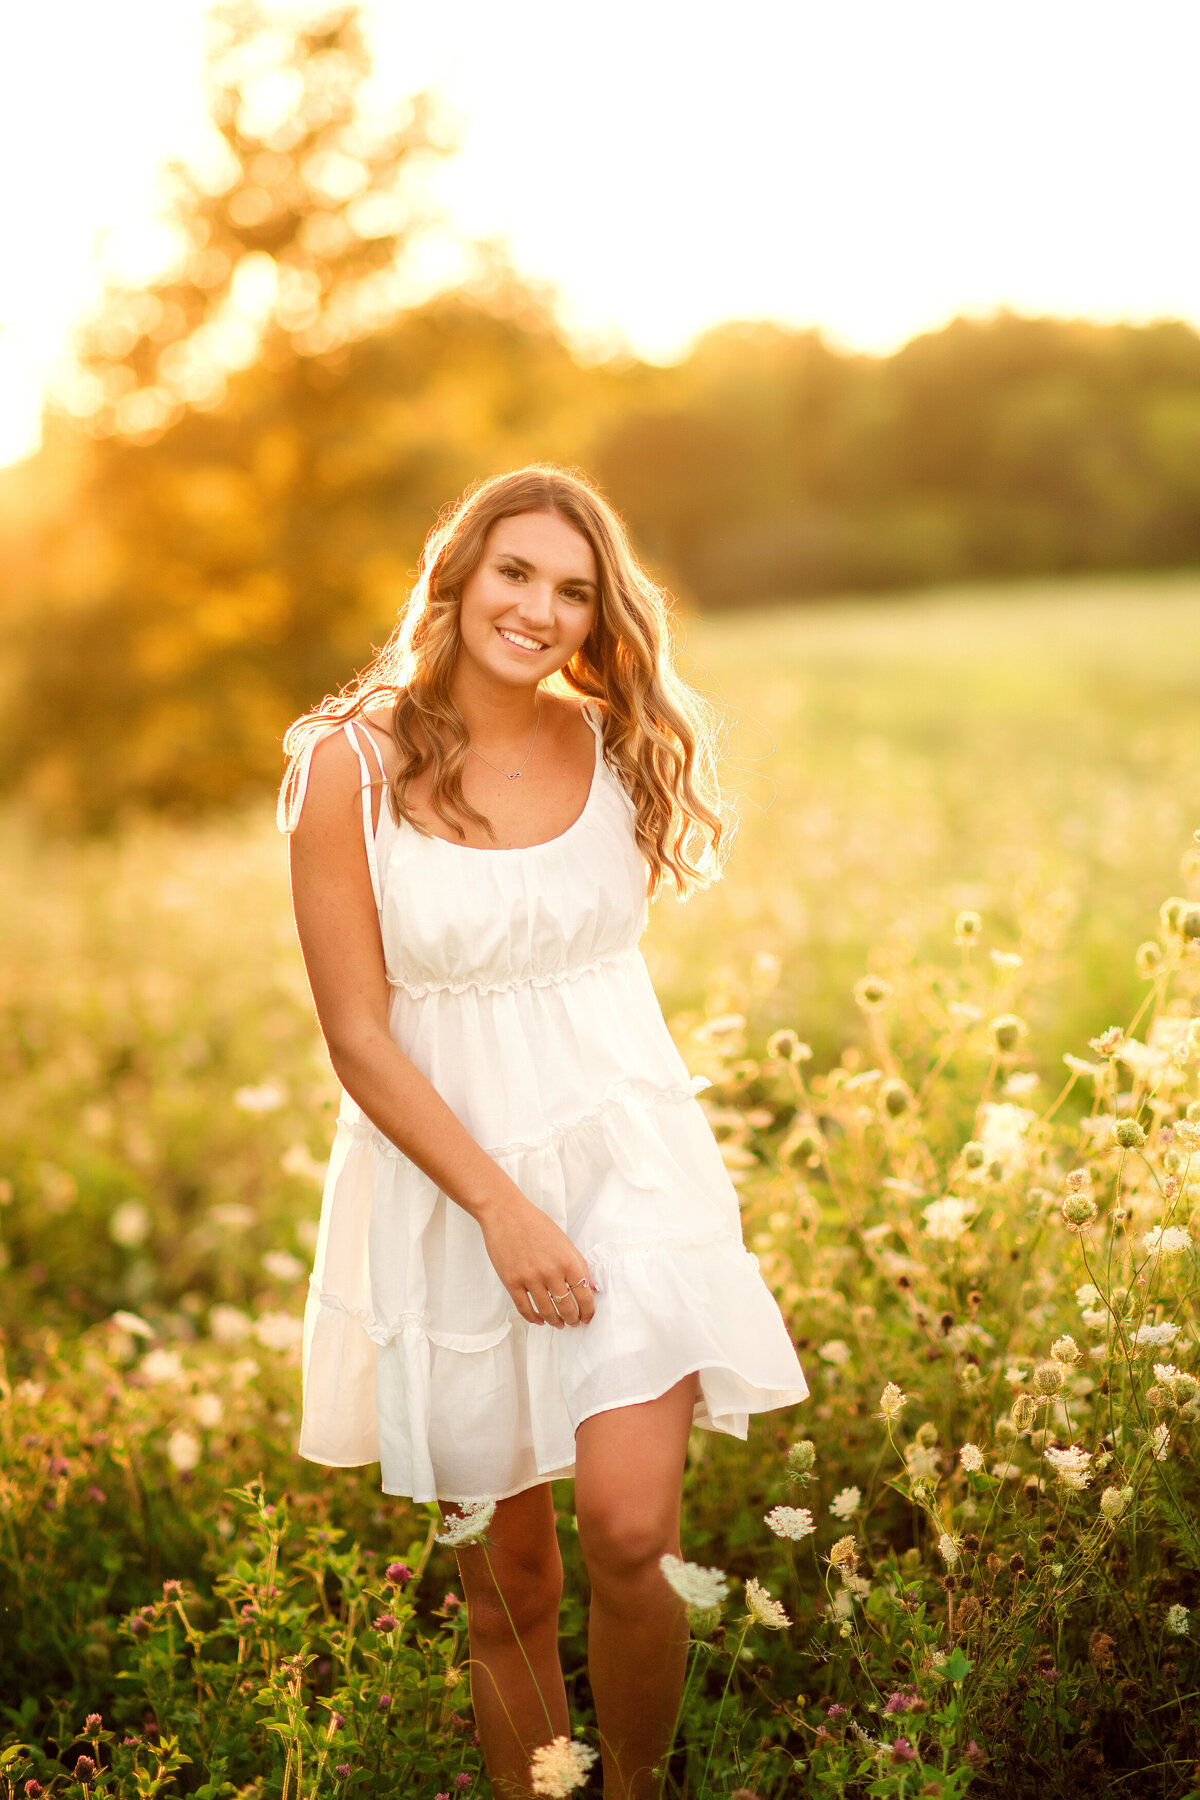 Des-Moines-Iowa-Senior-Girl-Theresa-Schumacher-Photography-Nature-Summer-Sumset-Flower-Field